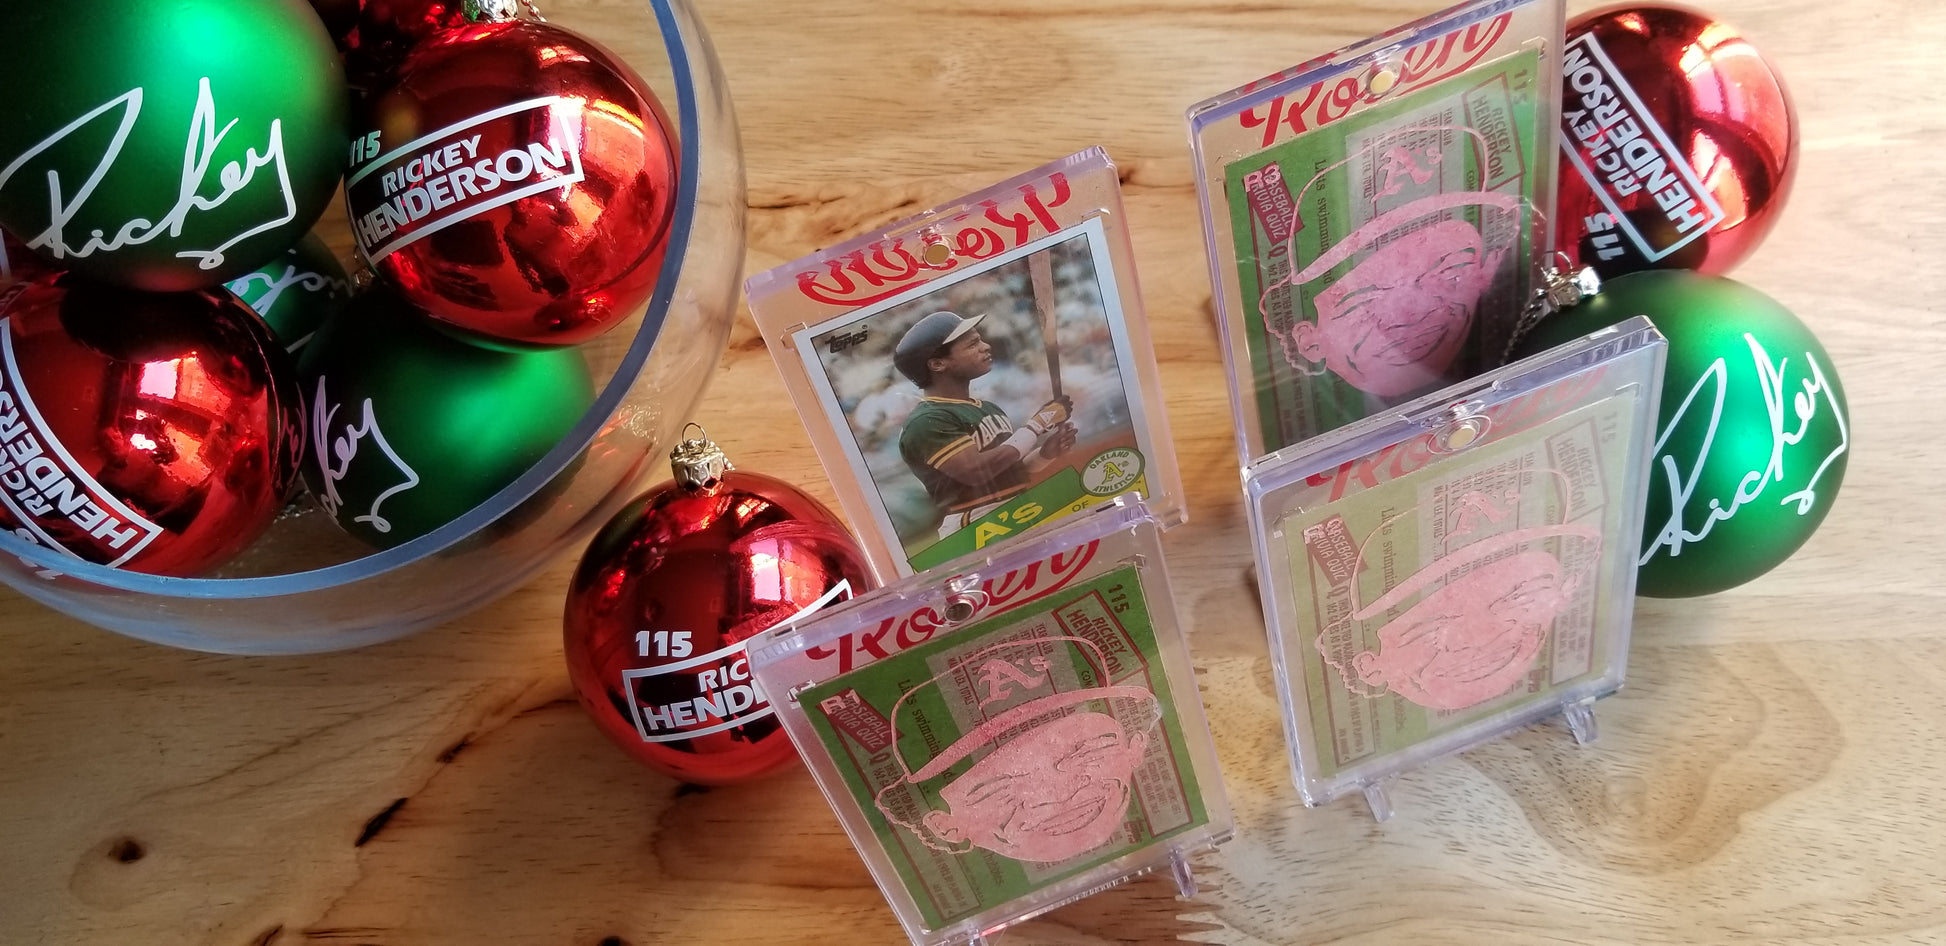 Baseball card art by Matthew Rosen - Rickey Henderson Christmas Ornaments